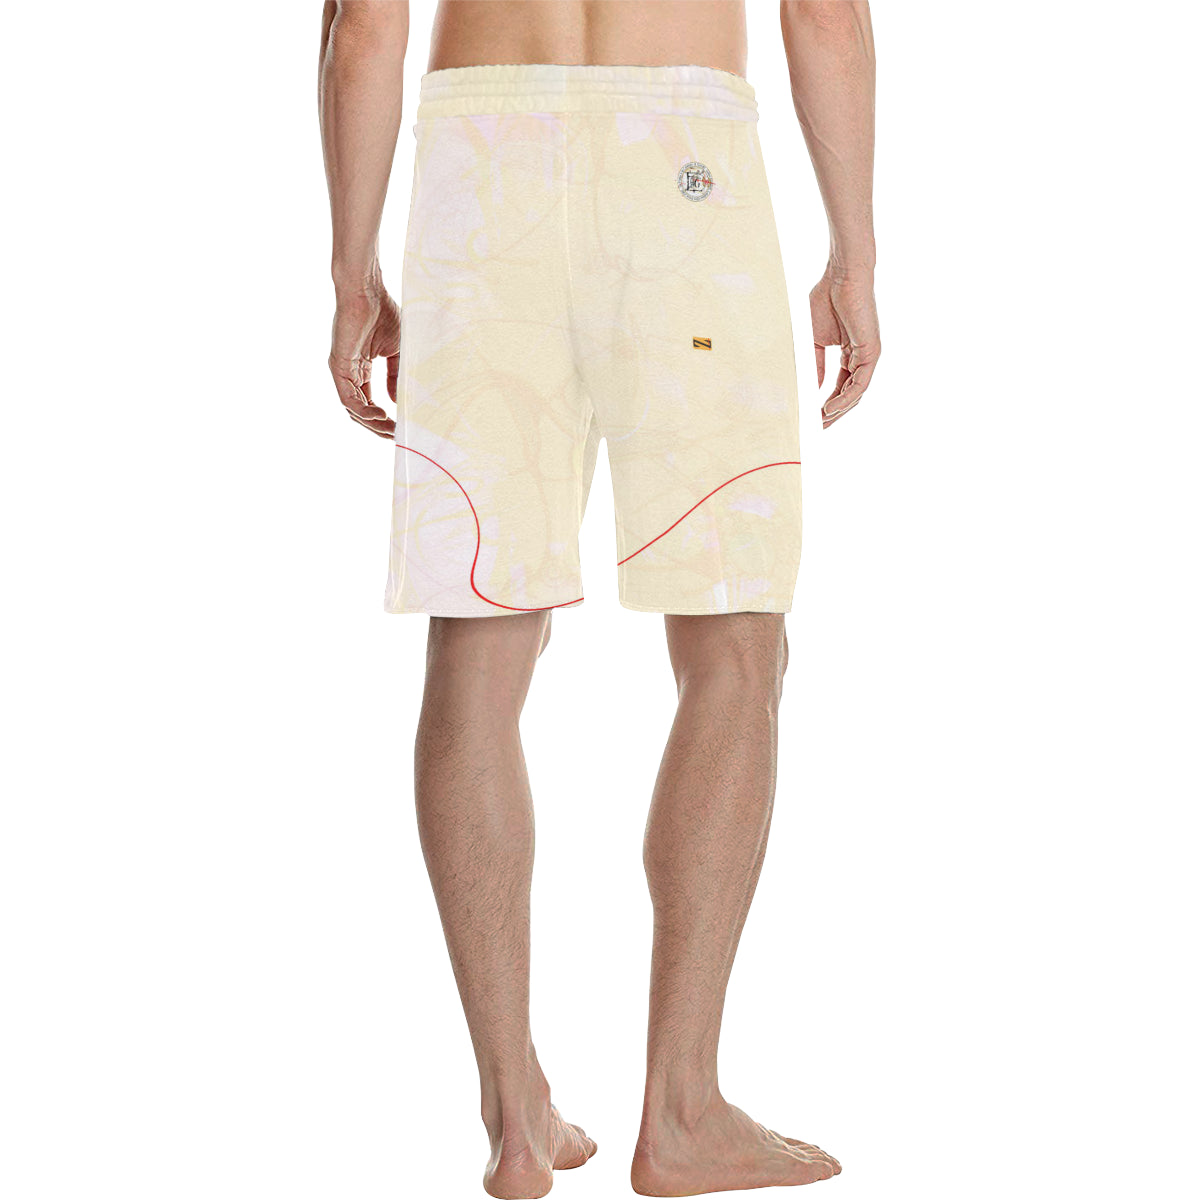 "Wak'Crème" swim shorts